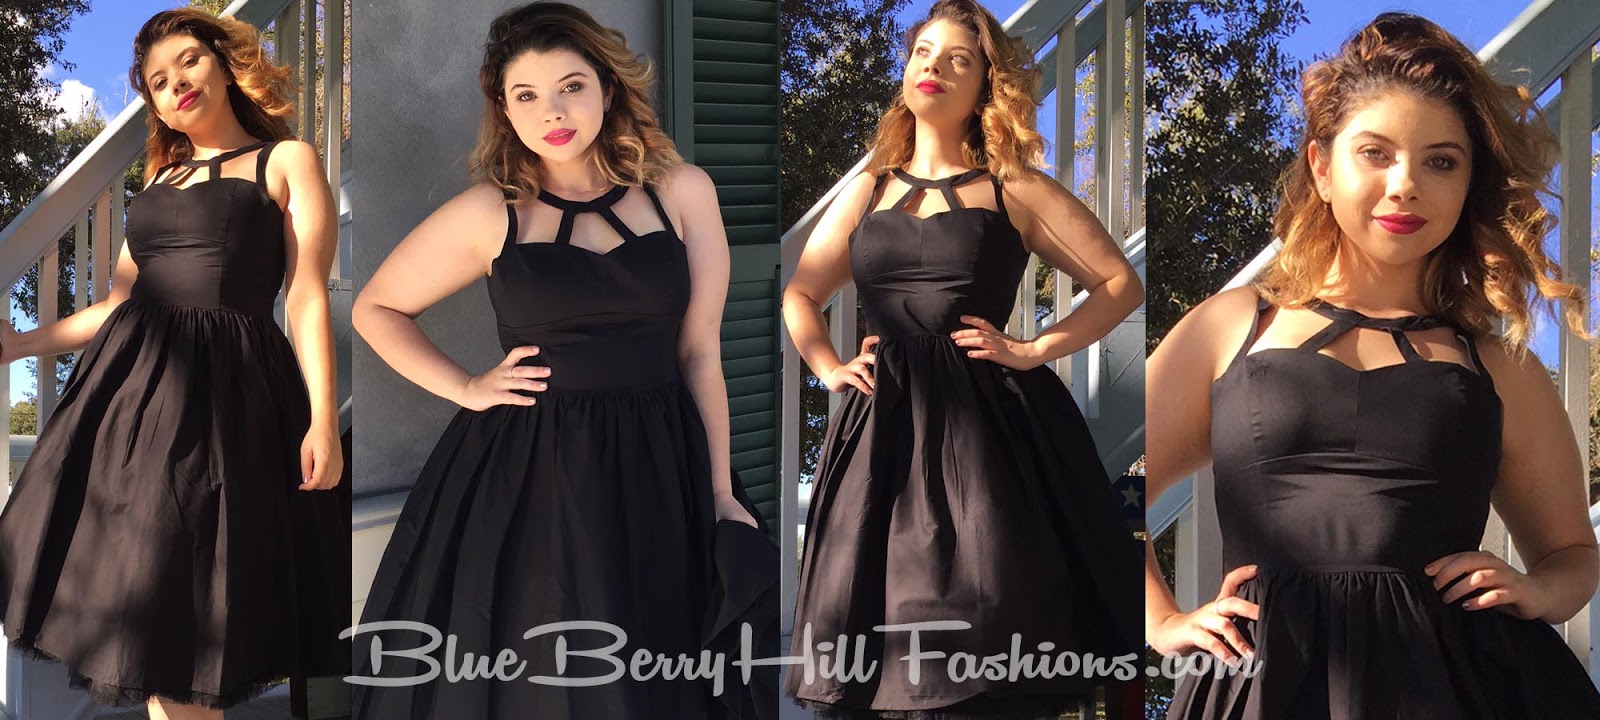 BlueBerry Hill Fashions: Gothic Black Strap Dress | xs to 4x